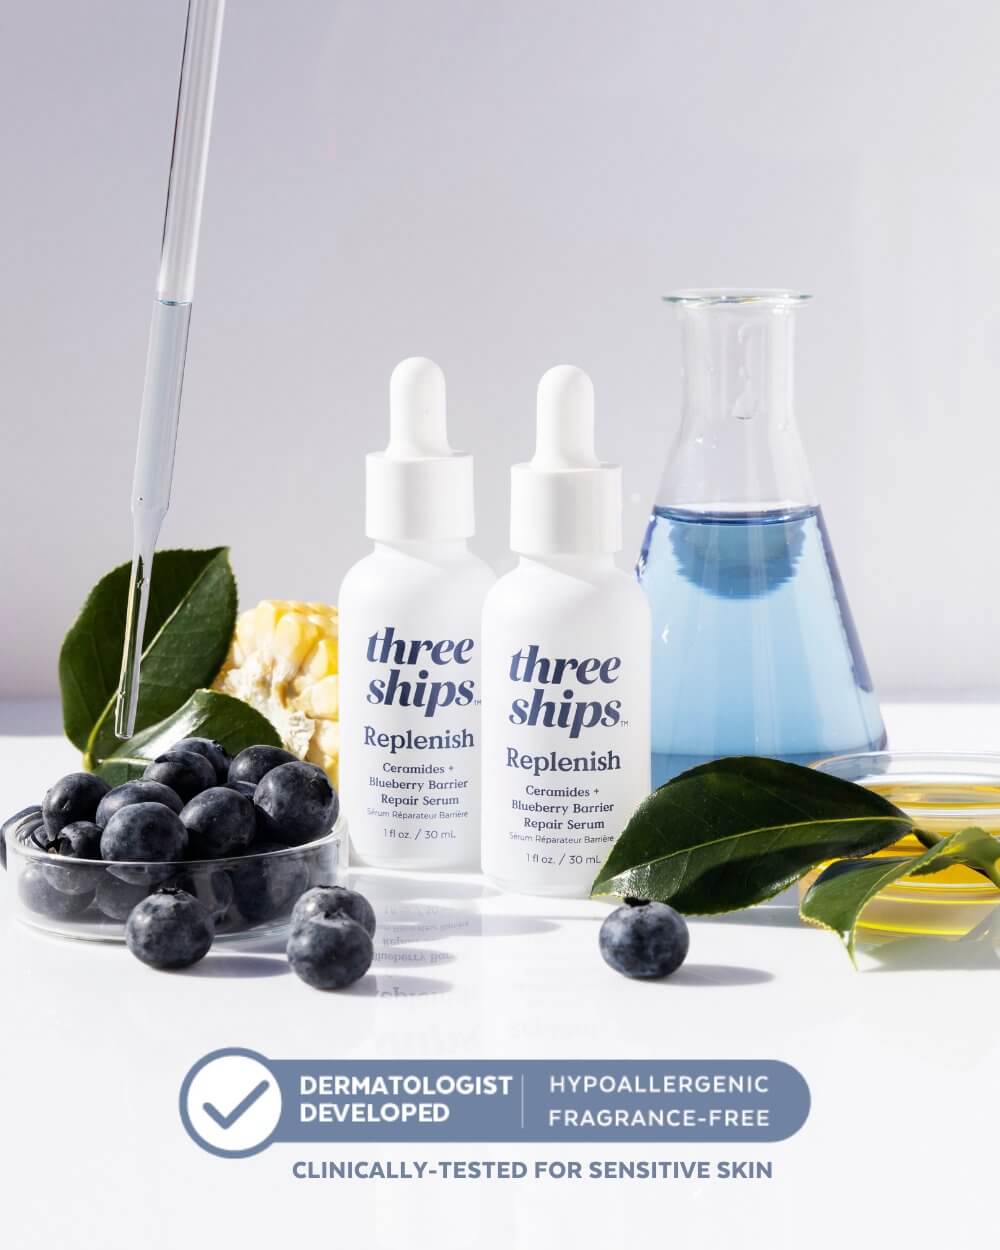 Replenish Ceramides + Blueberry Barrier Repair Serum Three Ships SERUMS Natural Vegan Cruelty-free Skincare